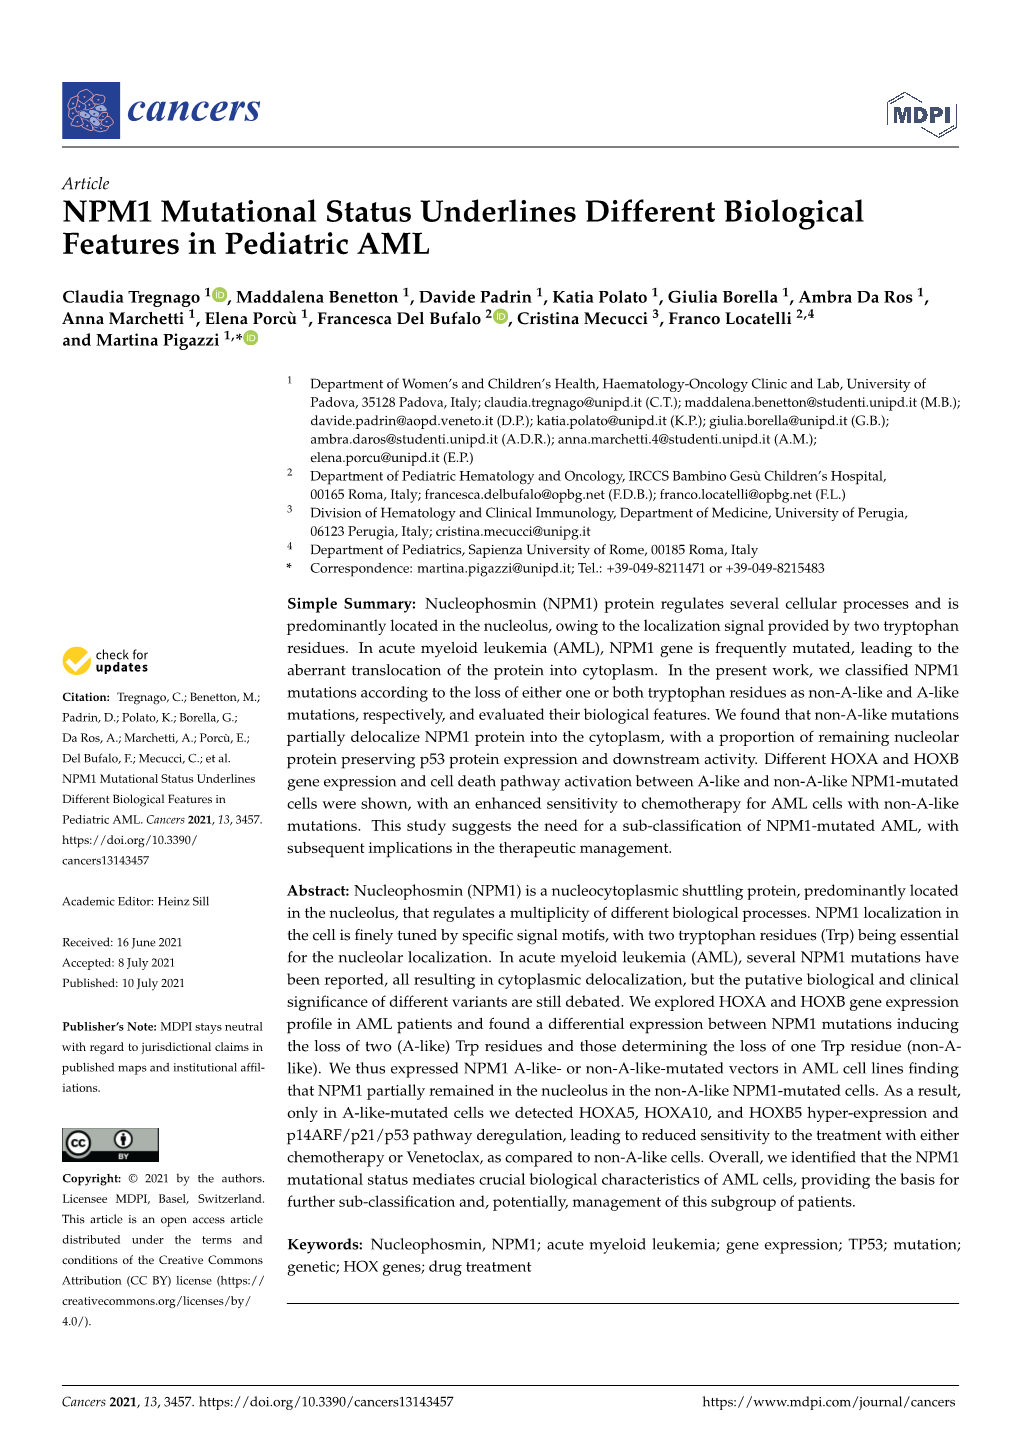 NPM1 Mutational Status Underlines Different Biological Features in Pediatric AML